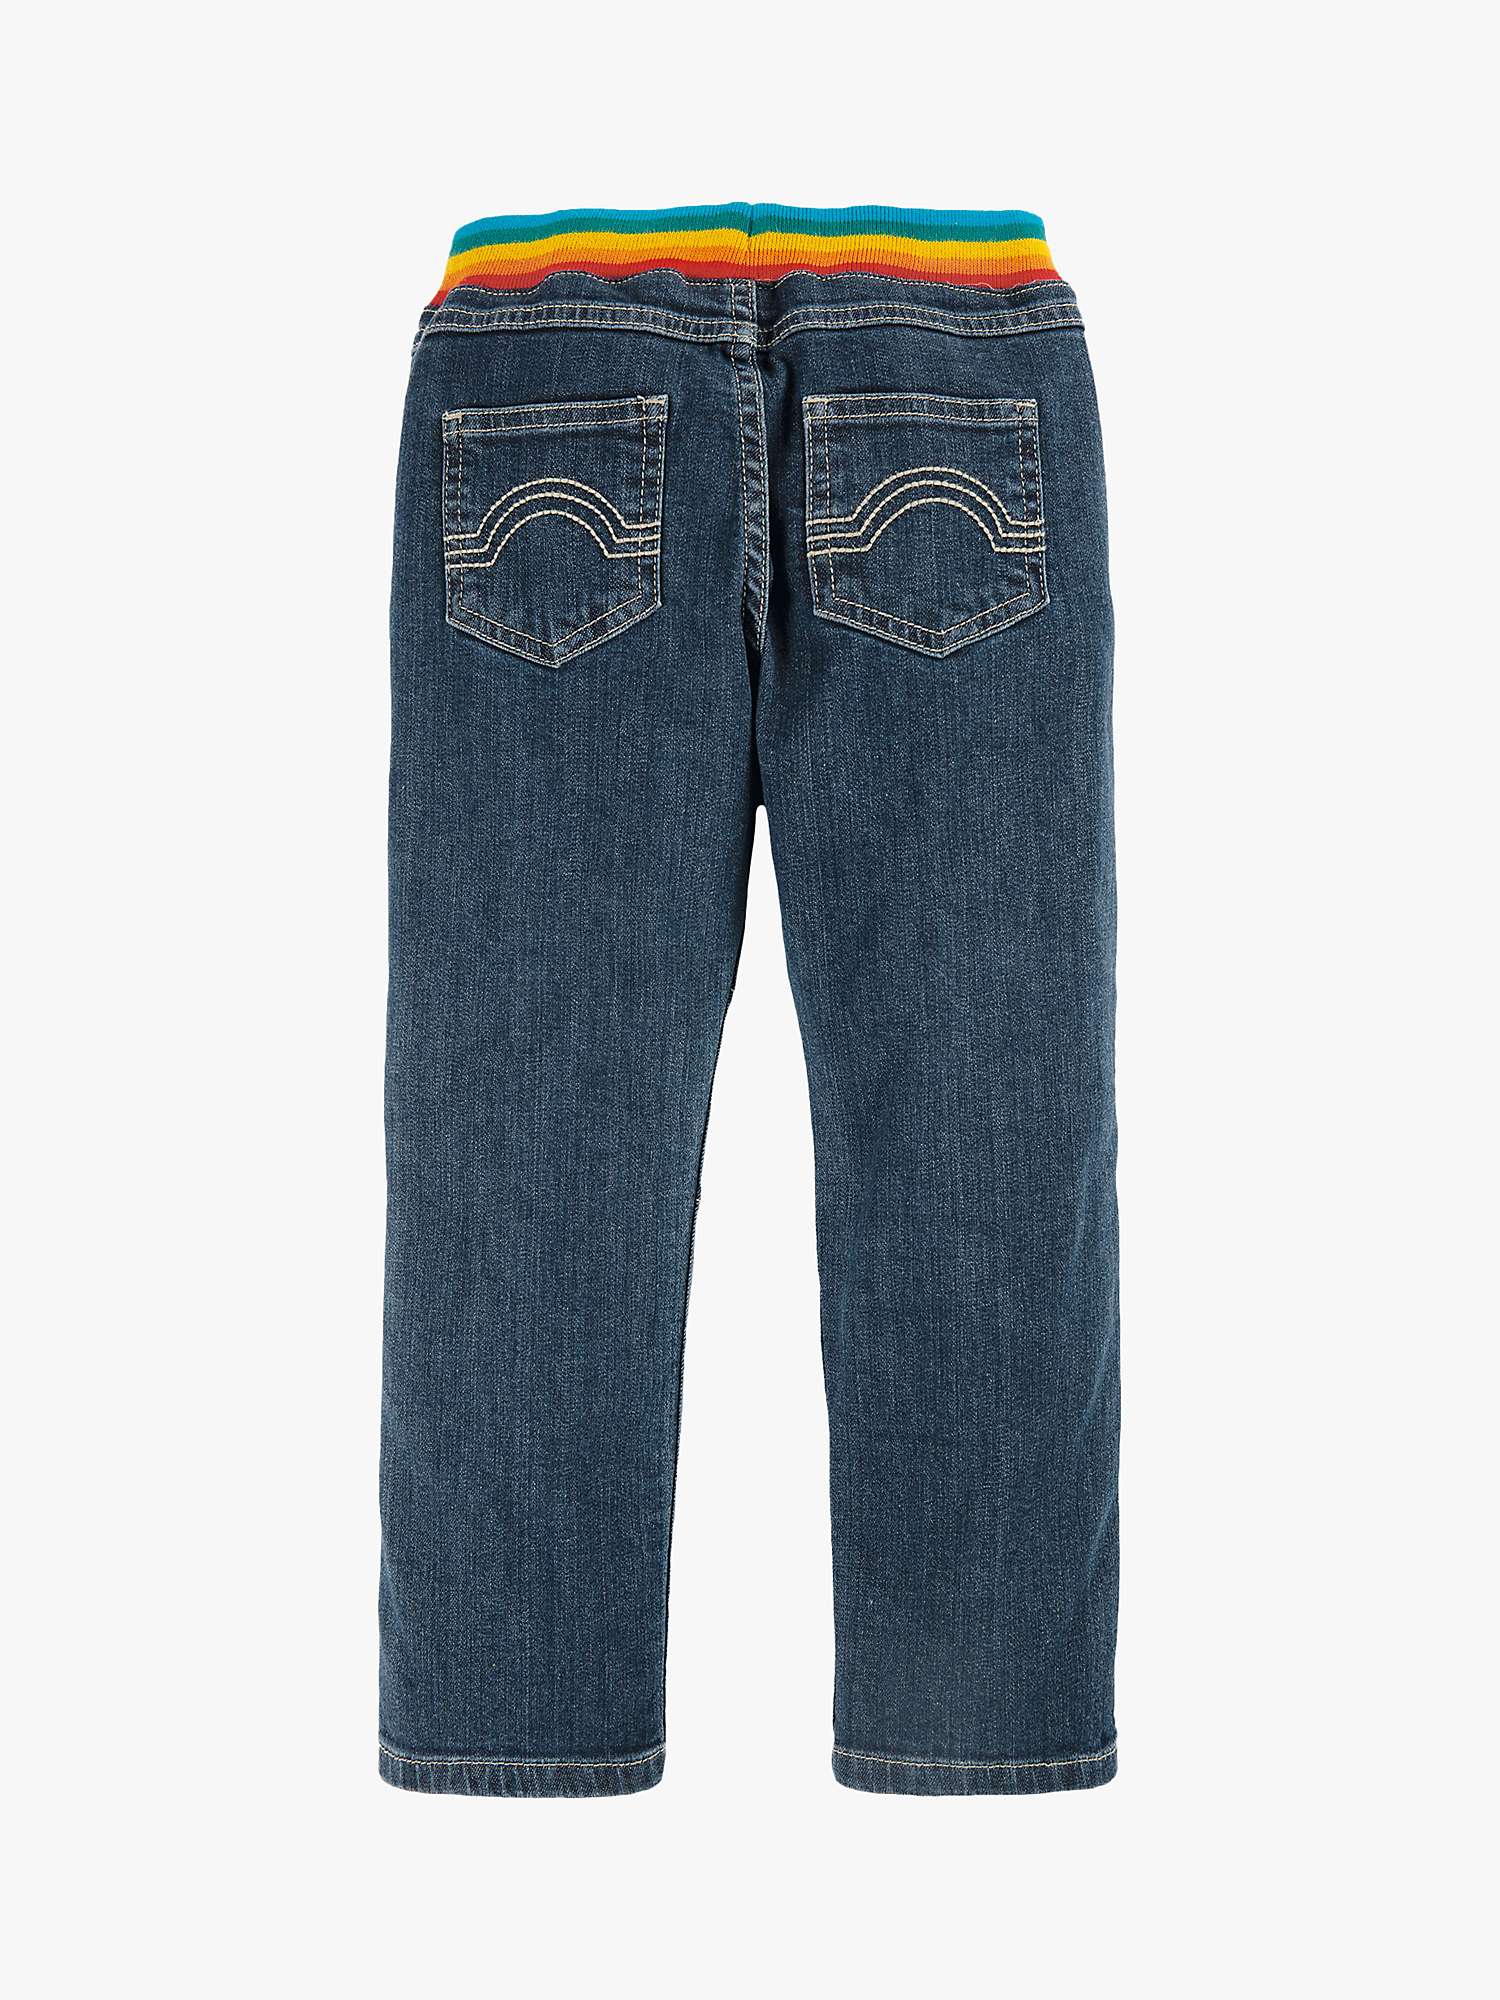 Buy Frugi Children's GOTS Organic Cotton Cody Comfy Jeans, Blue Online at johnlewis.com